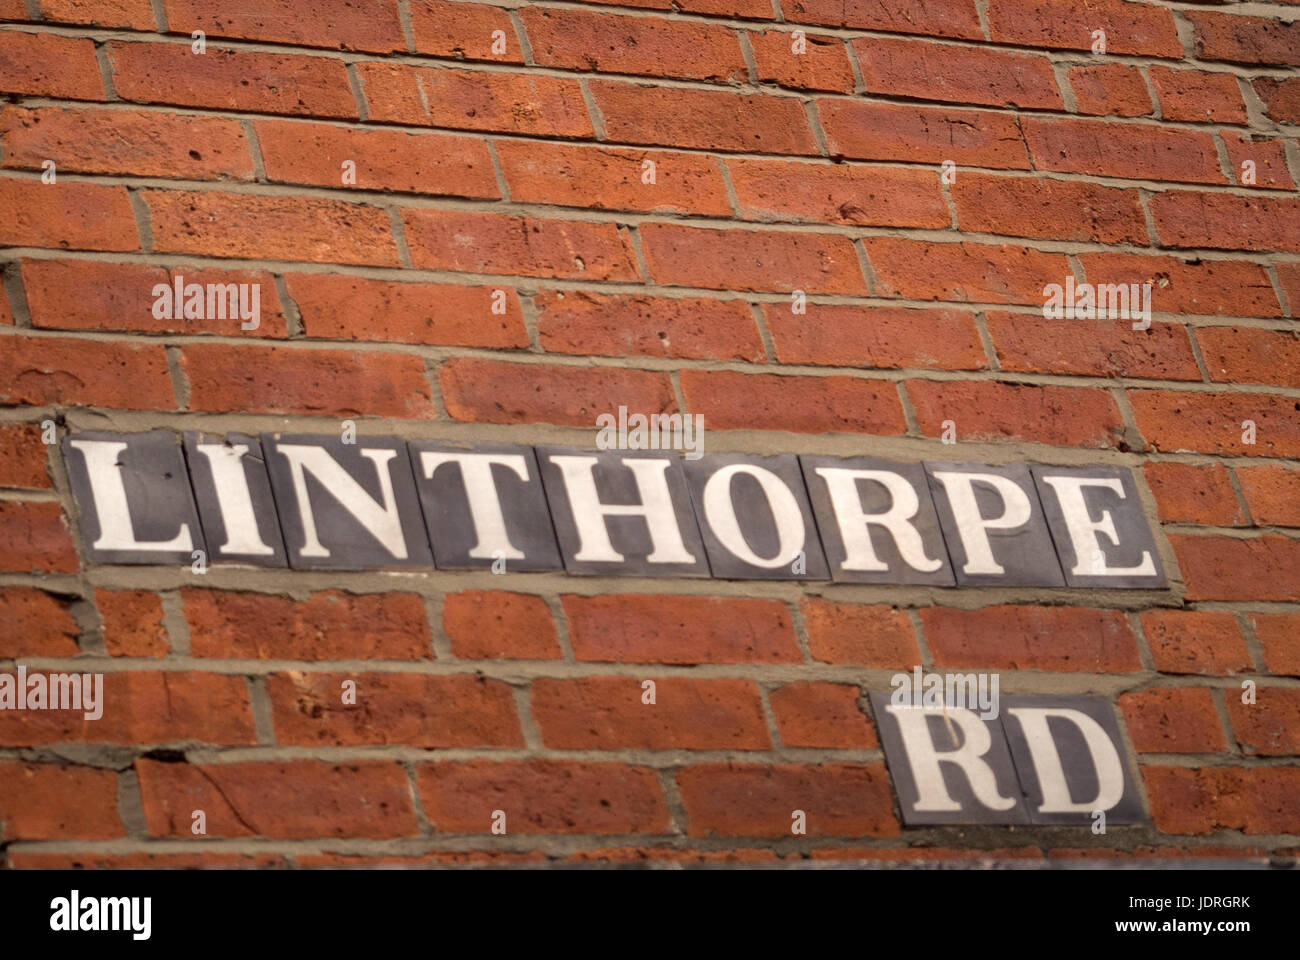 Linthorpe Road sign, Middlesbrough Banque D'Images